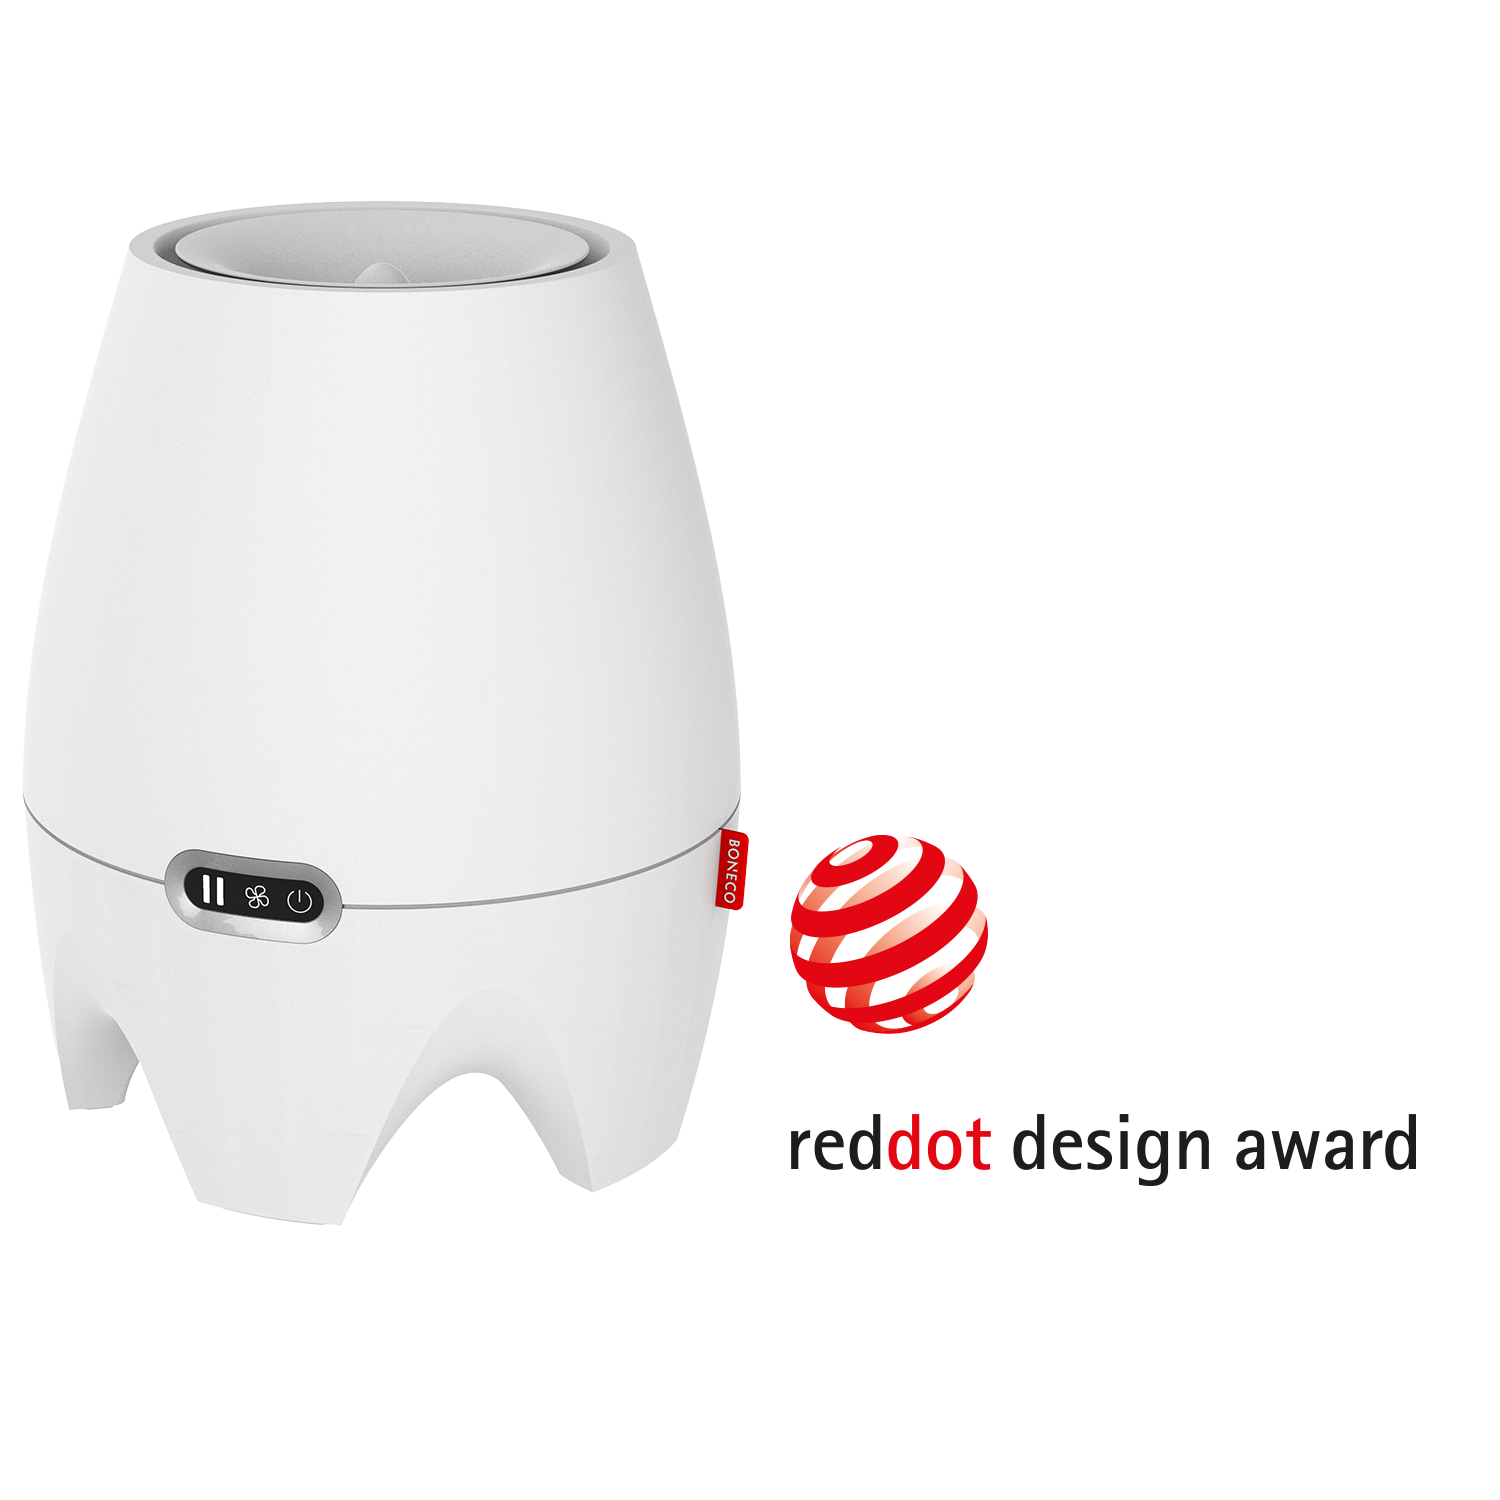 E200  Luftbefeuchter Verdunster BONECO reddotdesign award